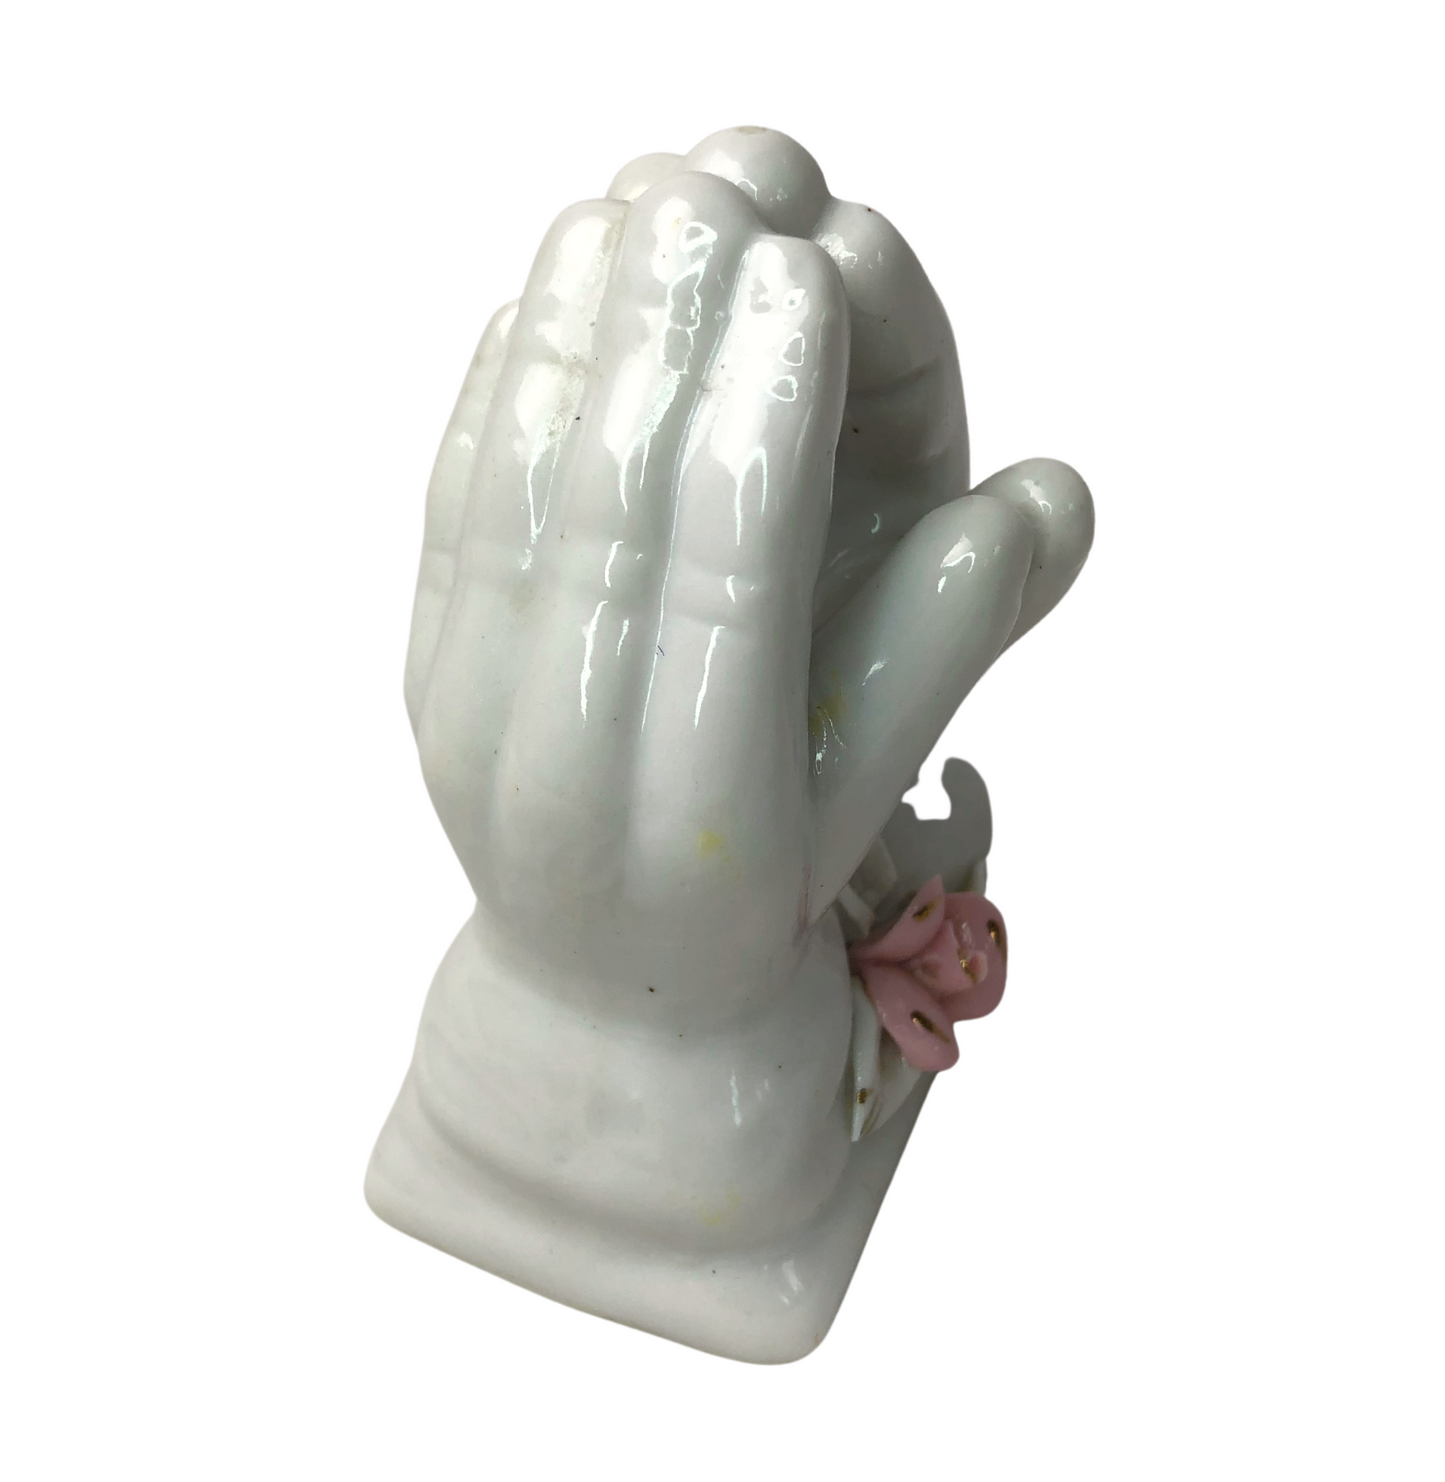 Vintage Porcelain Prayer Praying Hands Religious Figurine Statue